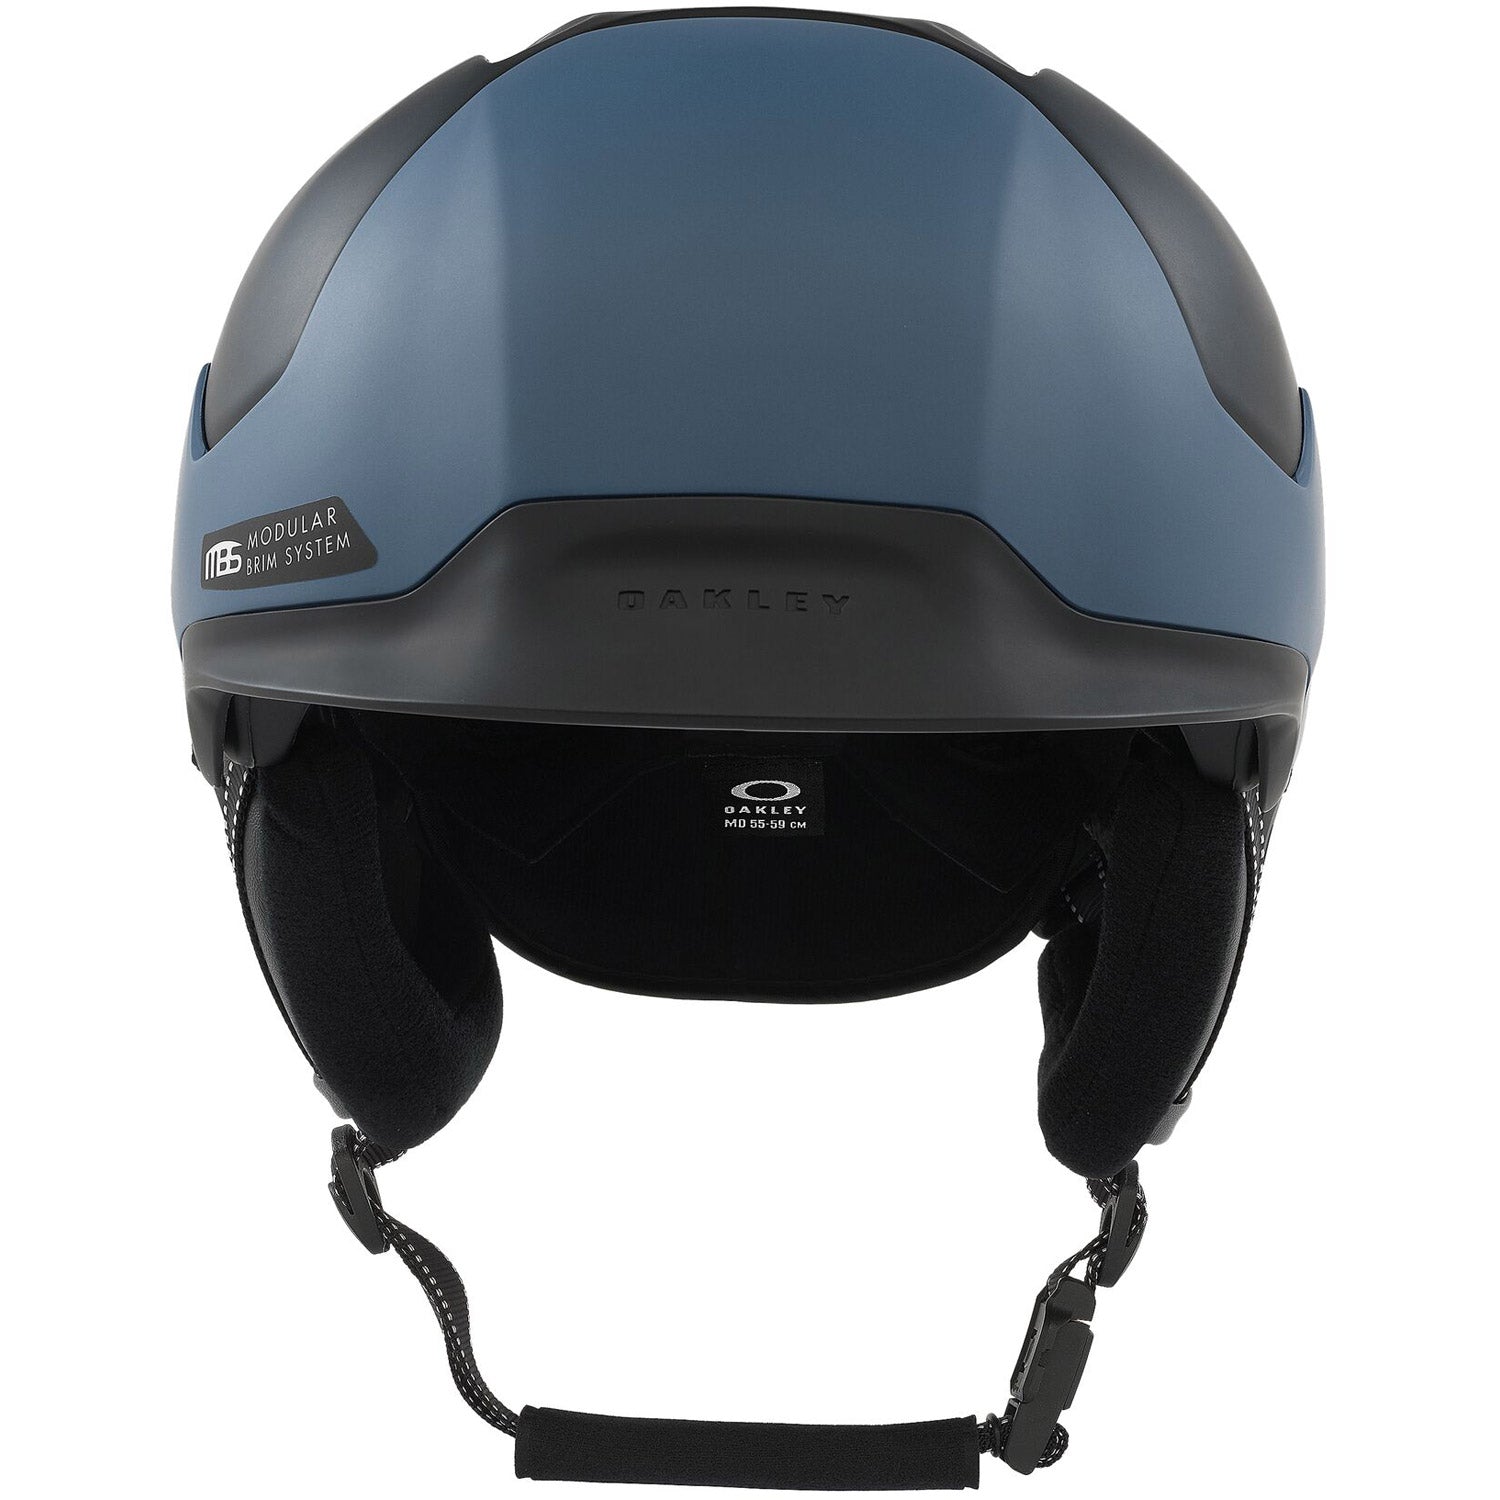 Mod5 MIPS Snow Helmet